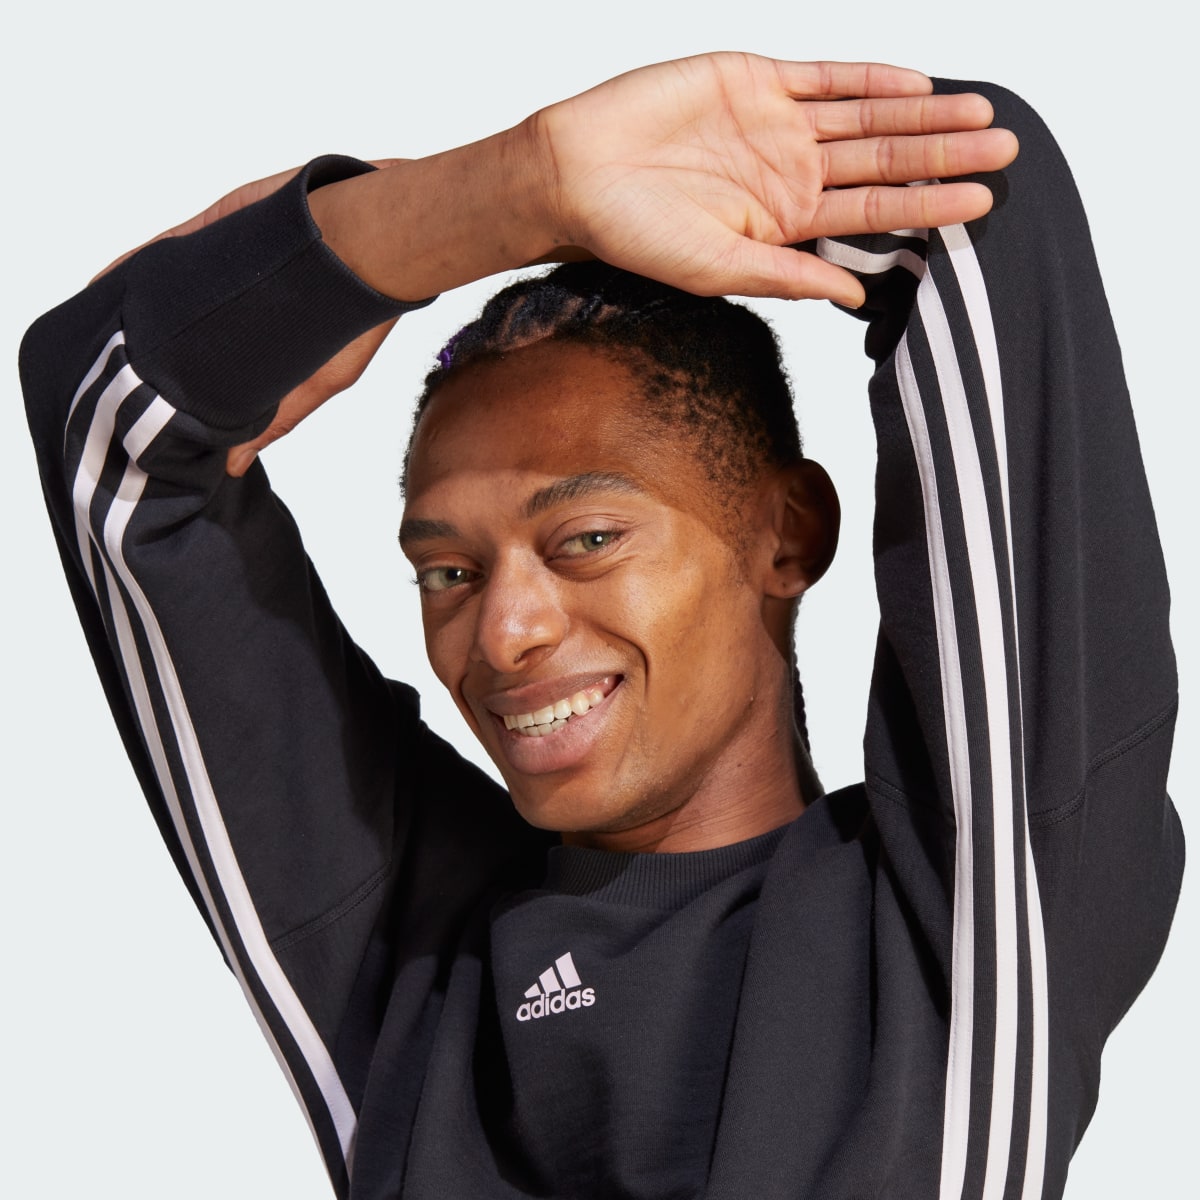 Adidas Dance 3-Stripes Corset-Inspired Sweatshirt. 5